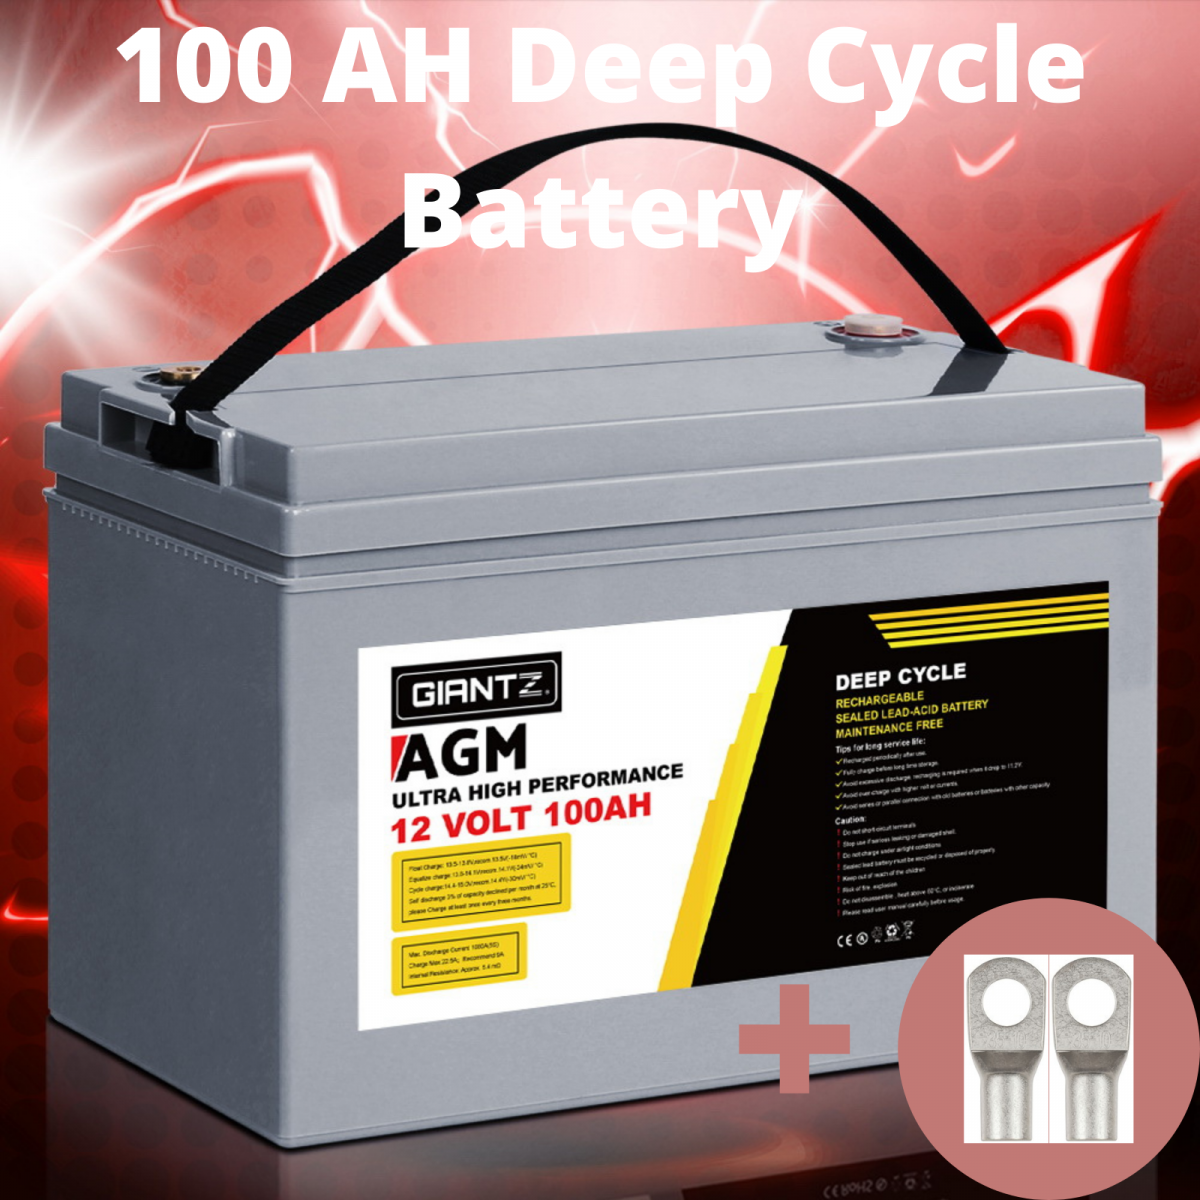 Portable 12V deep cycle battery, deep cycle batteries for sale, 100ah agm deep cycle battery, deep cycle batteries solar